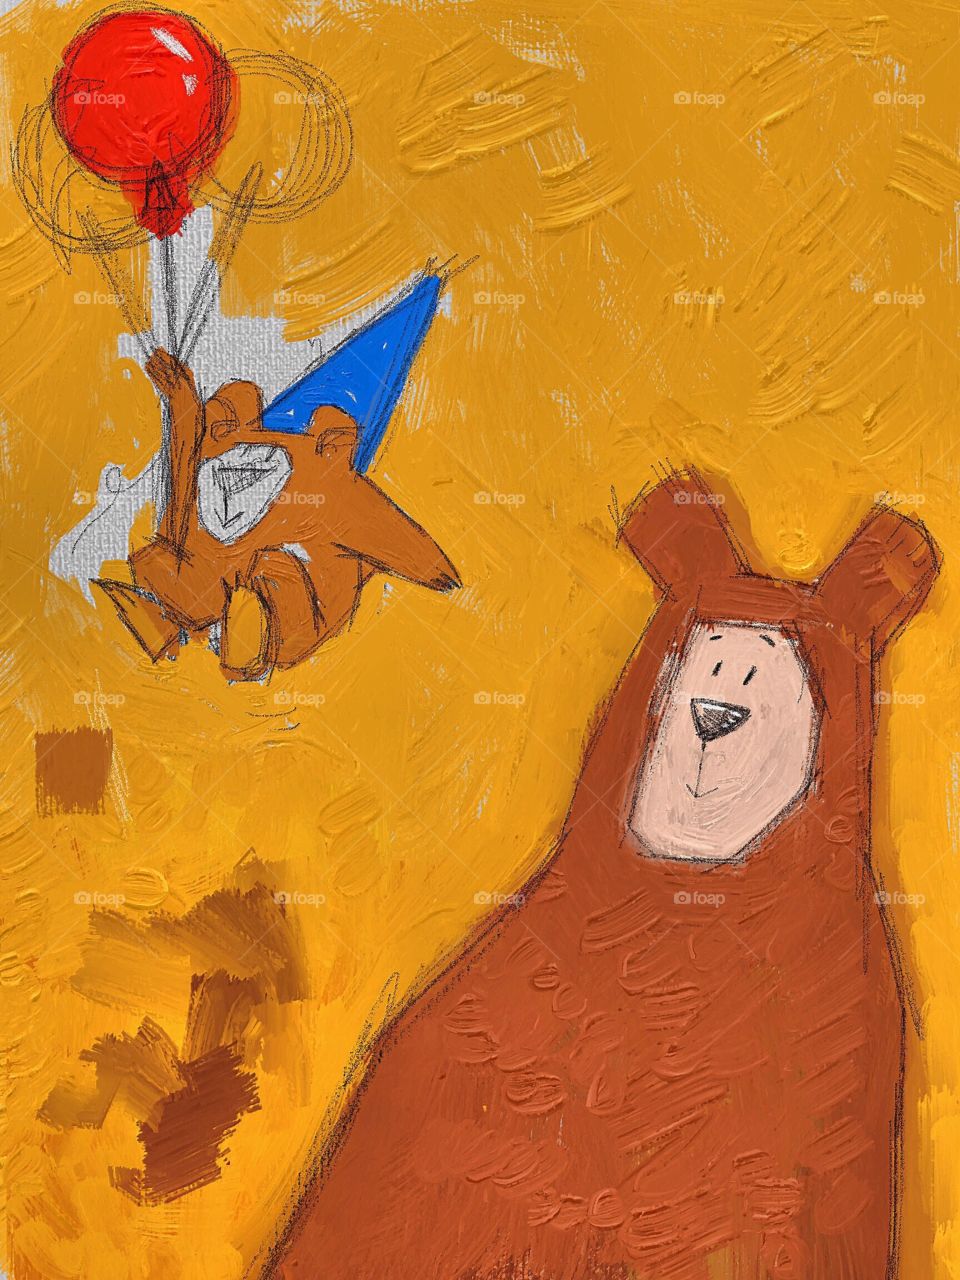 Bear and balloon. Wall Mural in progress...;)